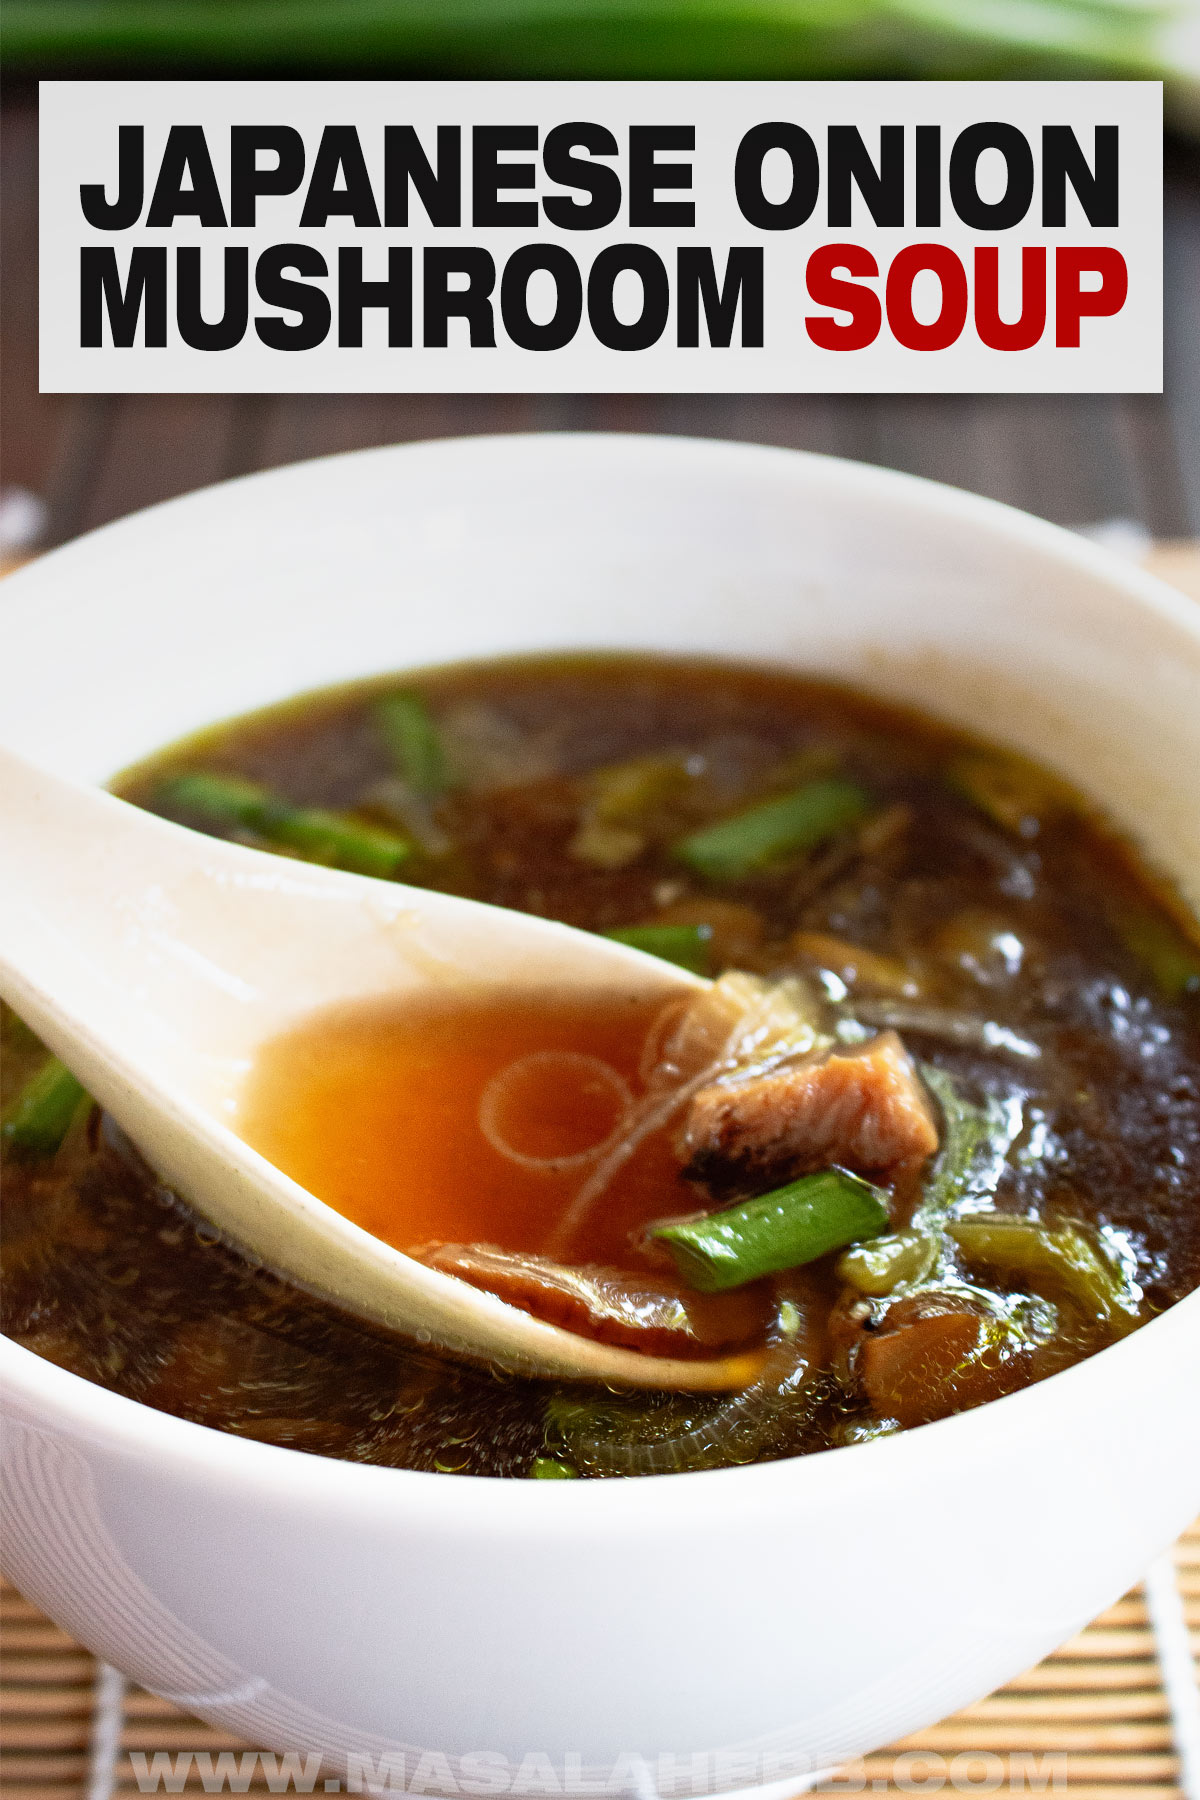 Japanese Onion Mushroom Soup Recipe pin cover